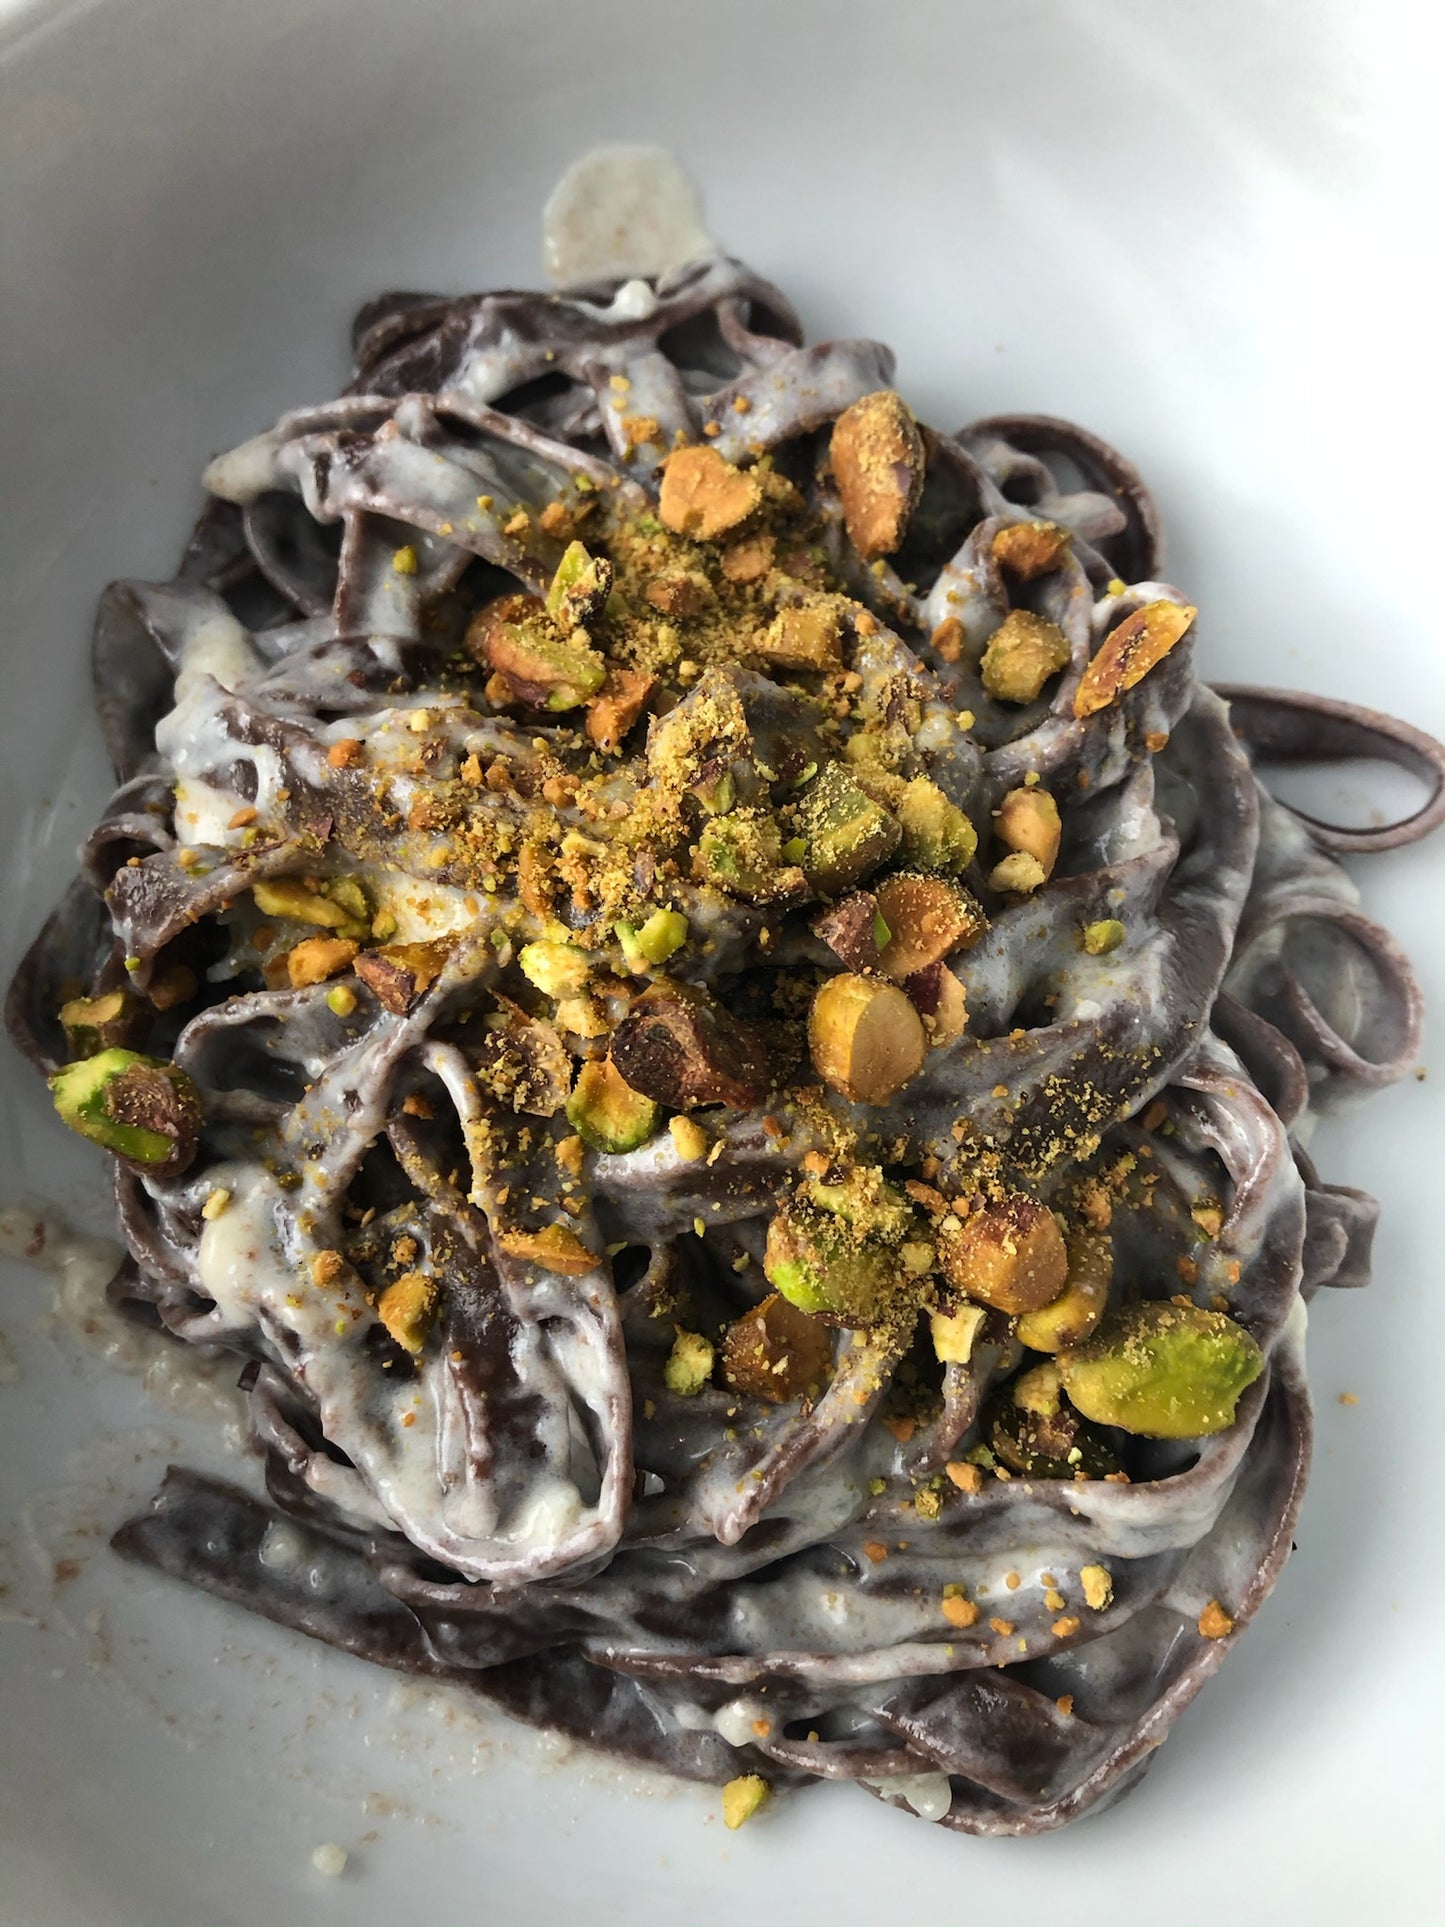 "Meal Kit" - Gorgonzola and Pistachio with Chocolate Tagliatelle Pasta